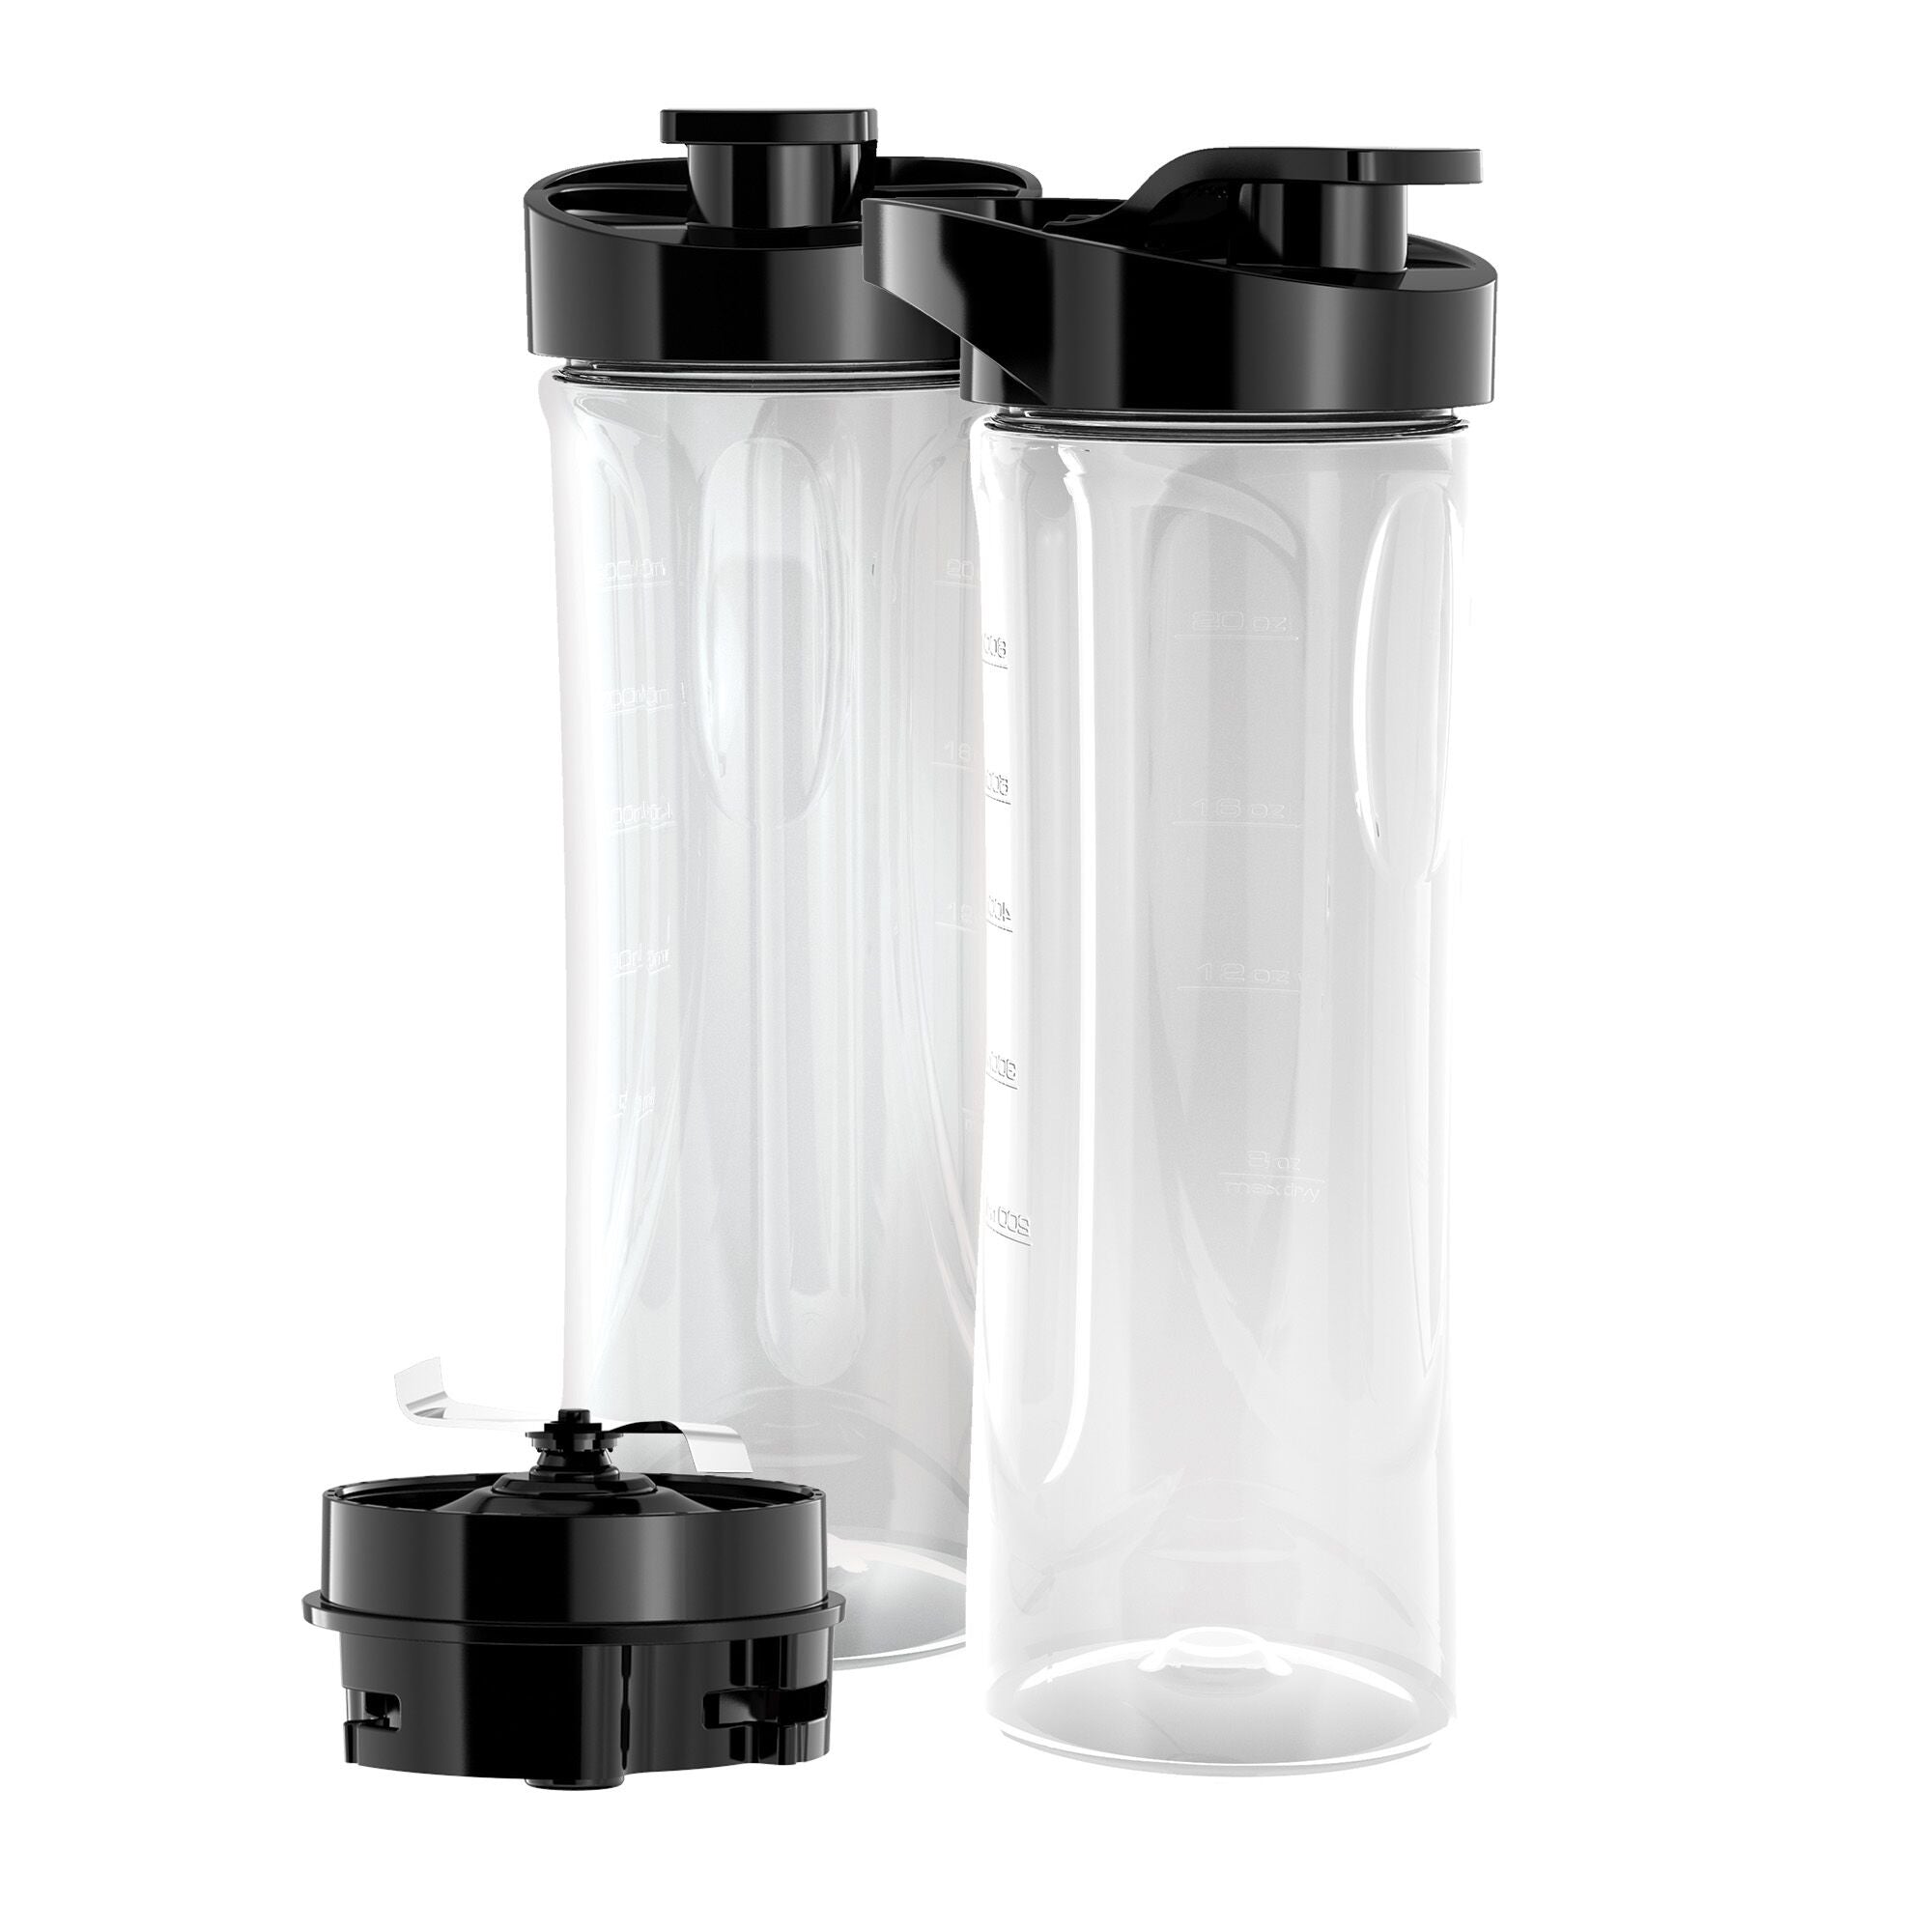 BLACK+DECKER BL1820SG-P Fusion Blade Digital Blender with 6 Cup Glass Jar,  Black/Stainless Steel